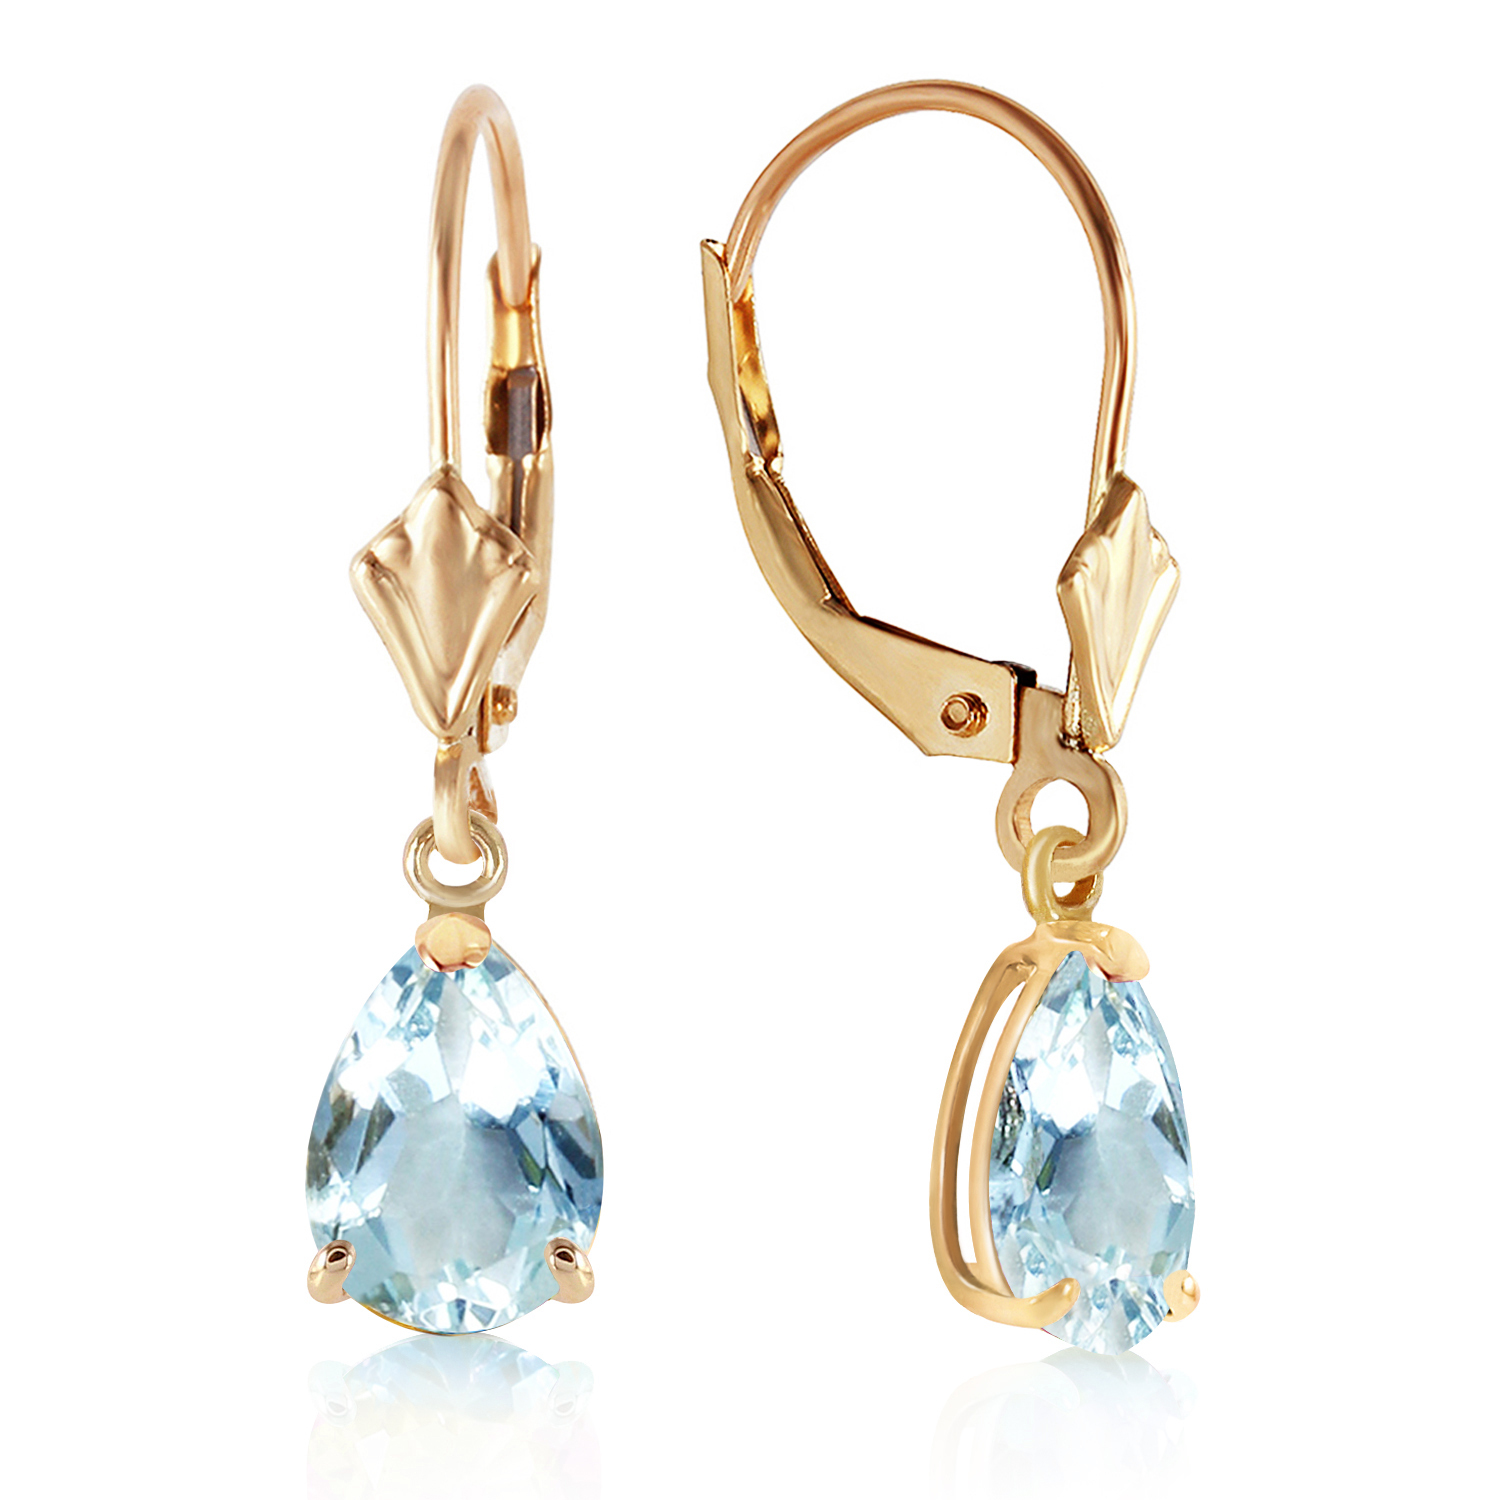 2.85 Carat 14K Solid Gold Extravaganza Aquamarine Earrings - $202.31